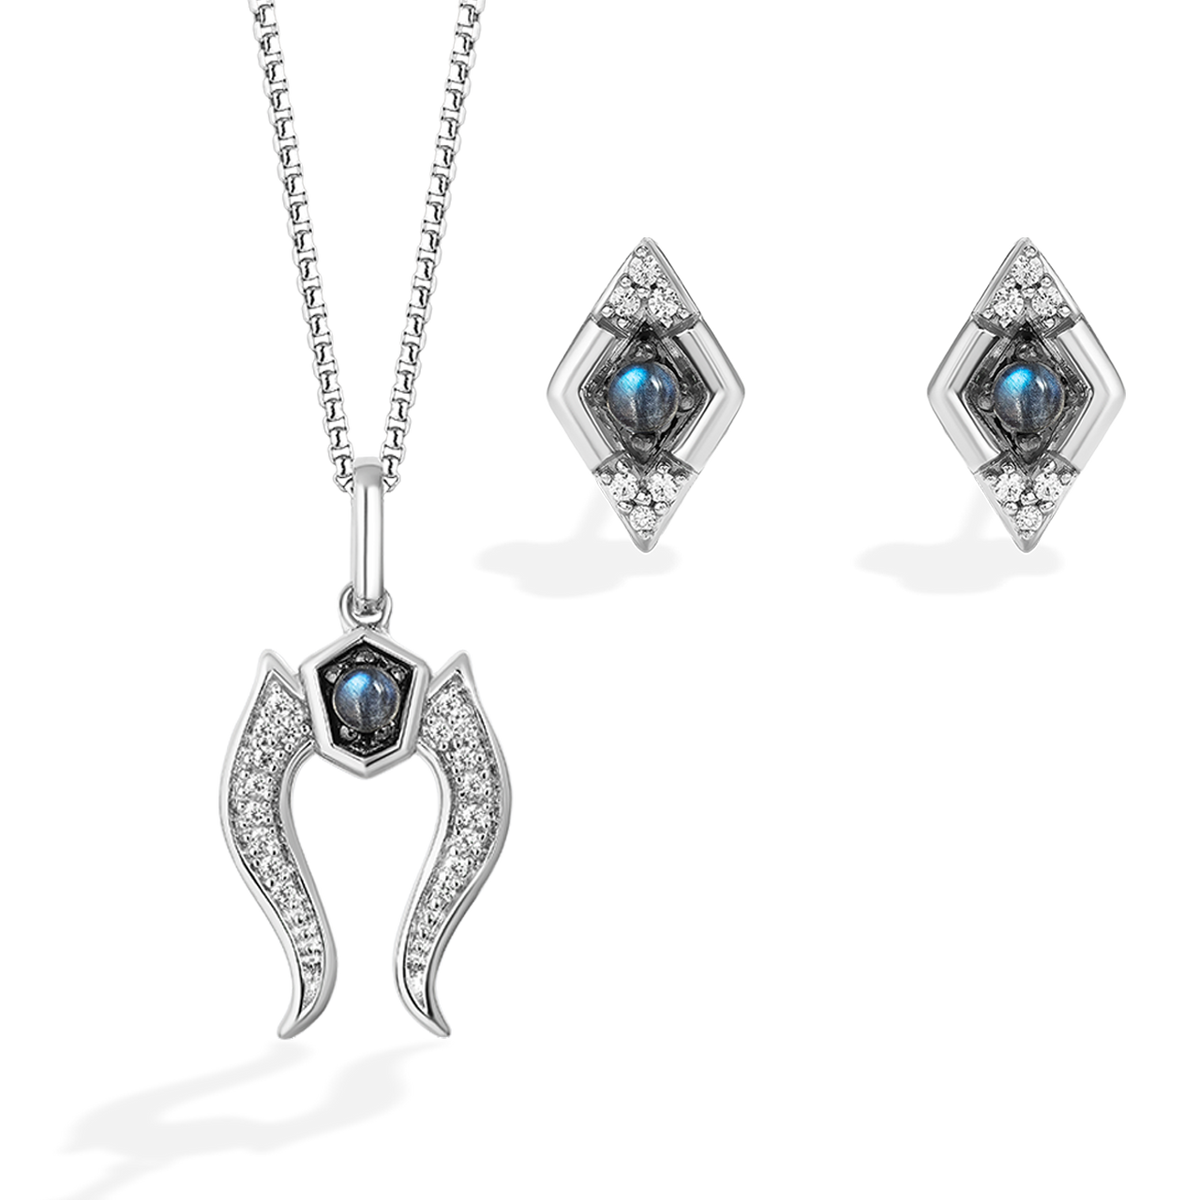 Star Wars Ahsoka Tano Diamond Necklace Pendant